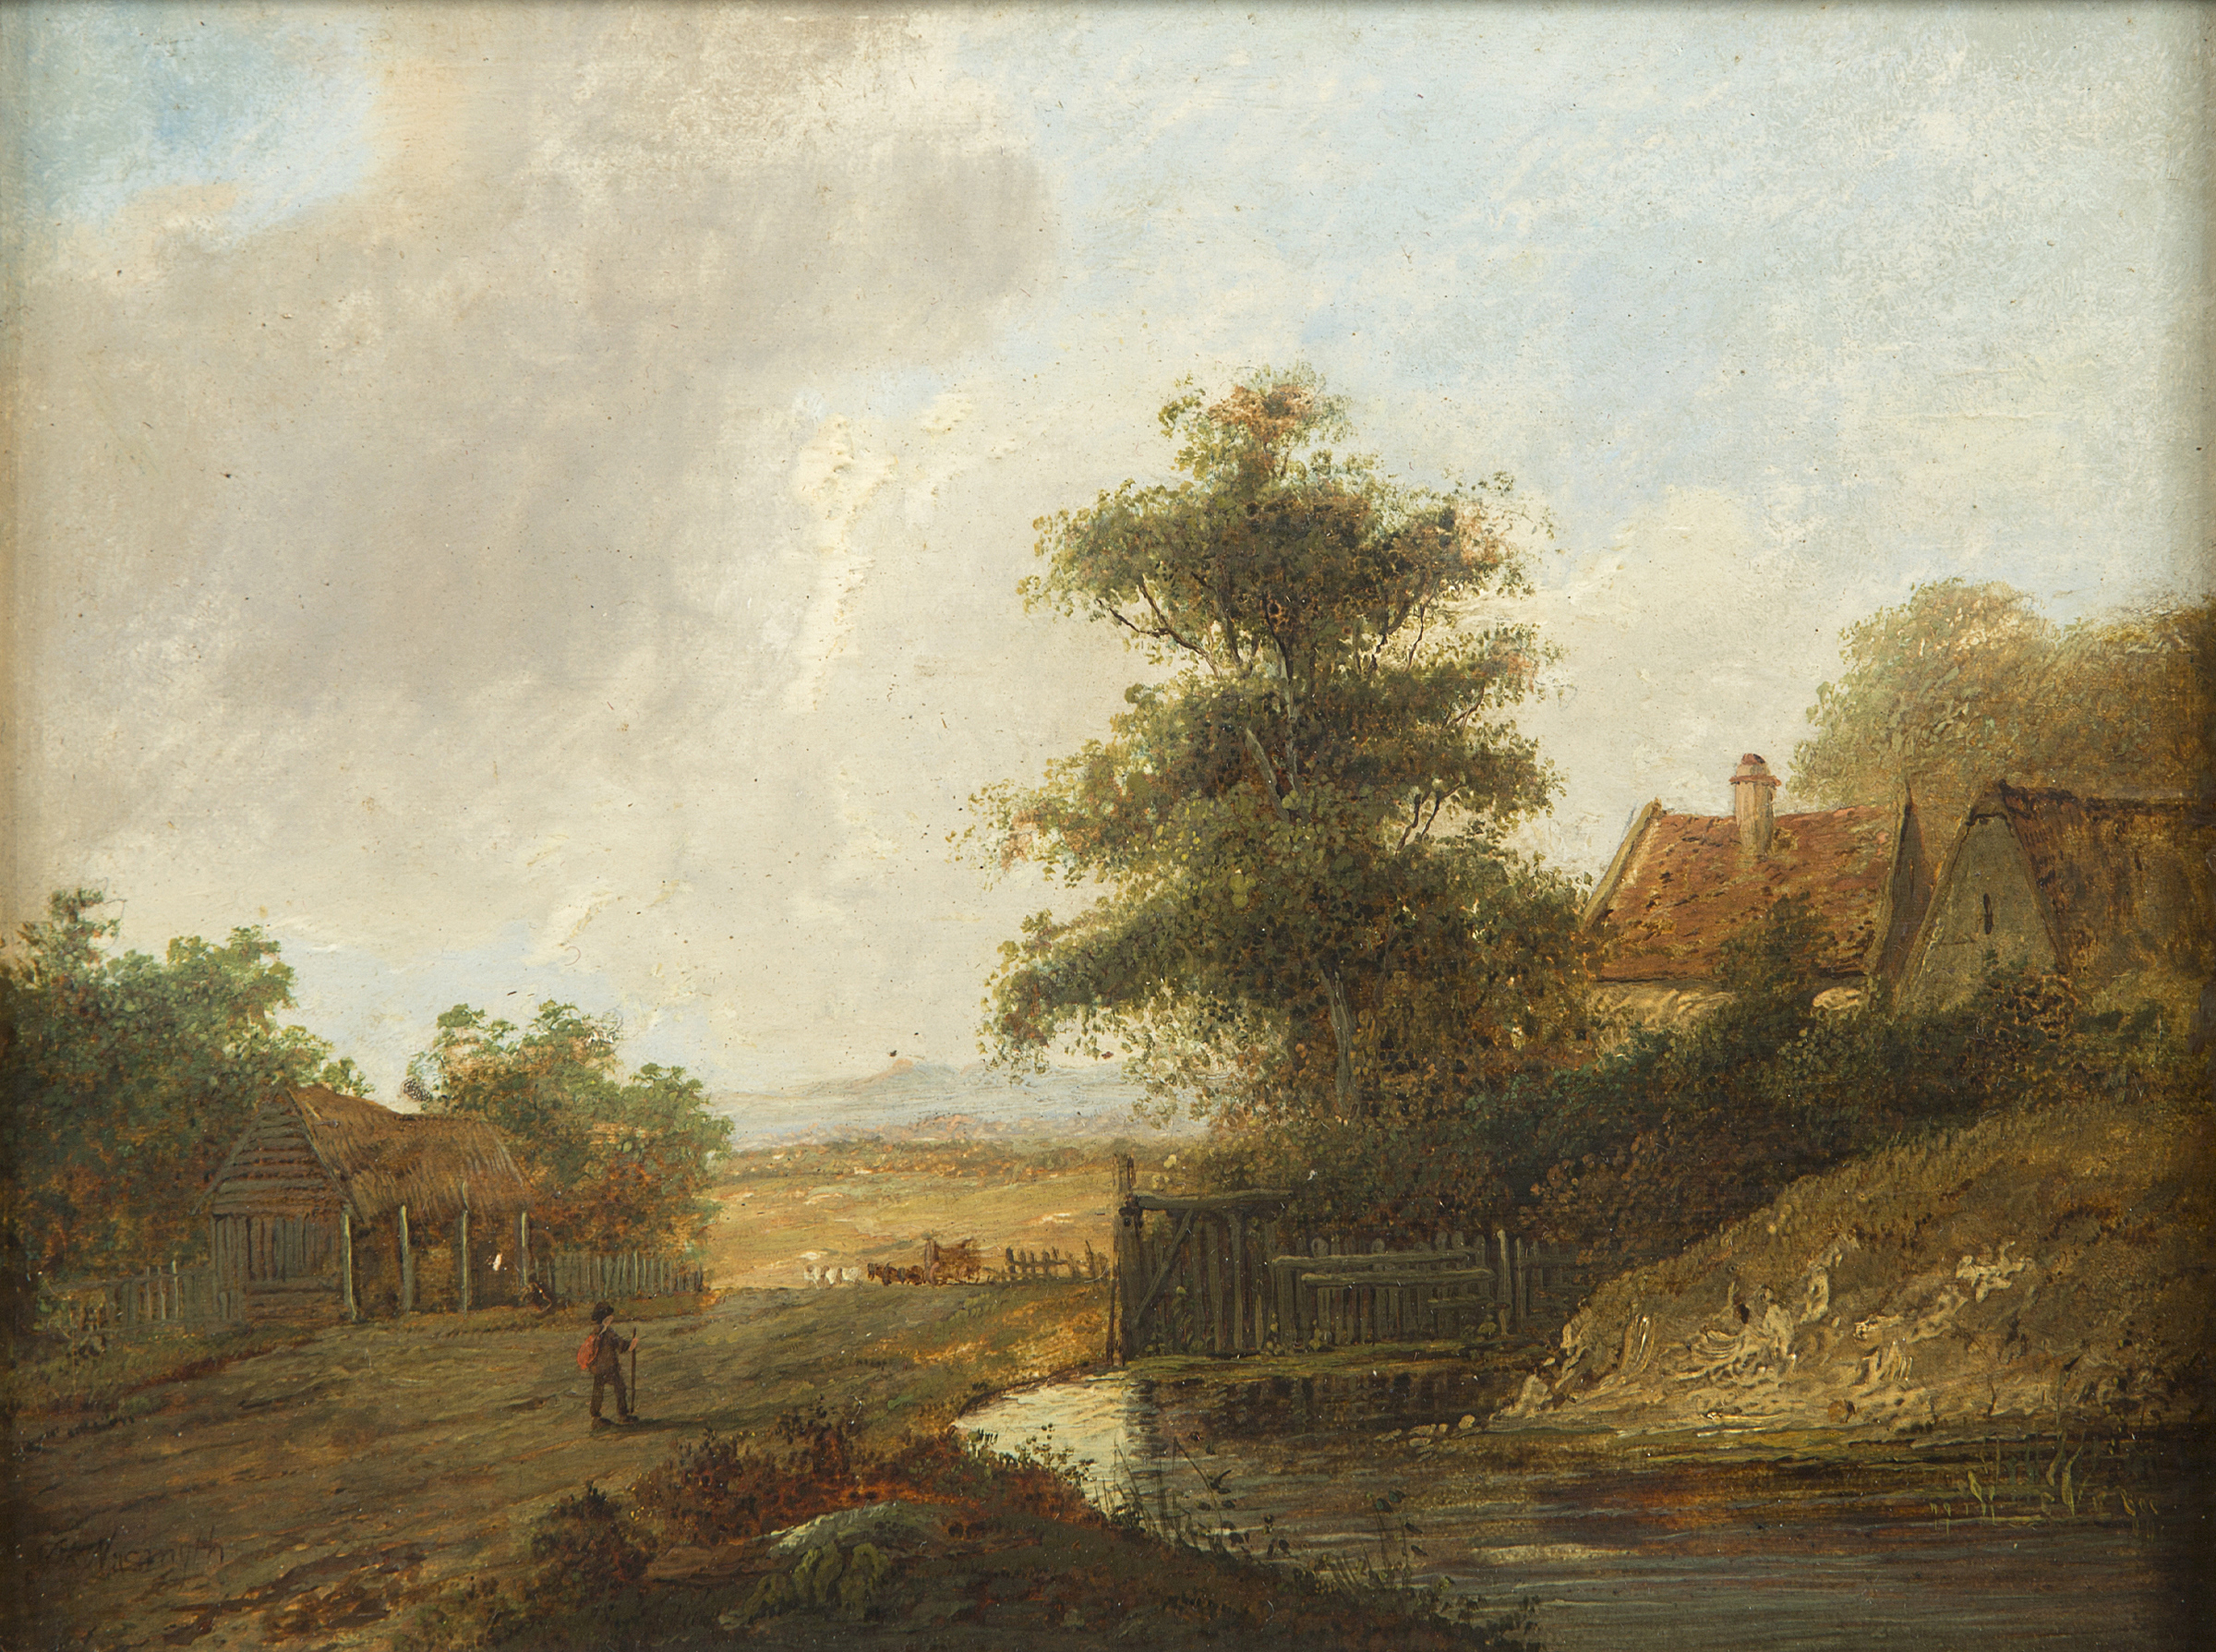 ATTRIBUTED TO PATRICK NASMYTH (1787-1831), 
Figure on a Lane,